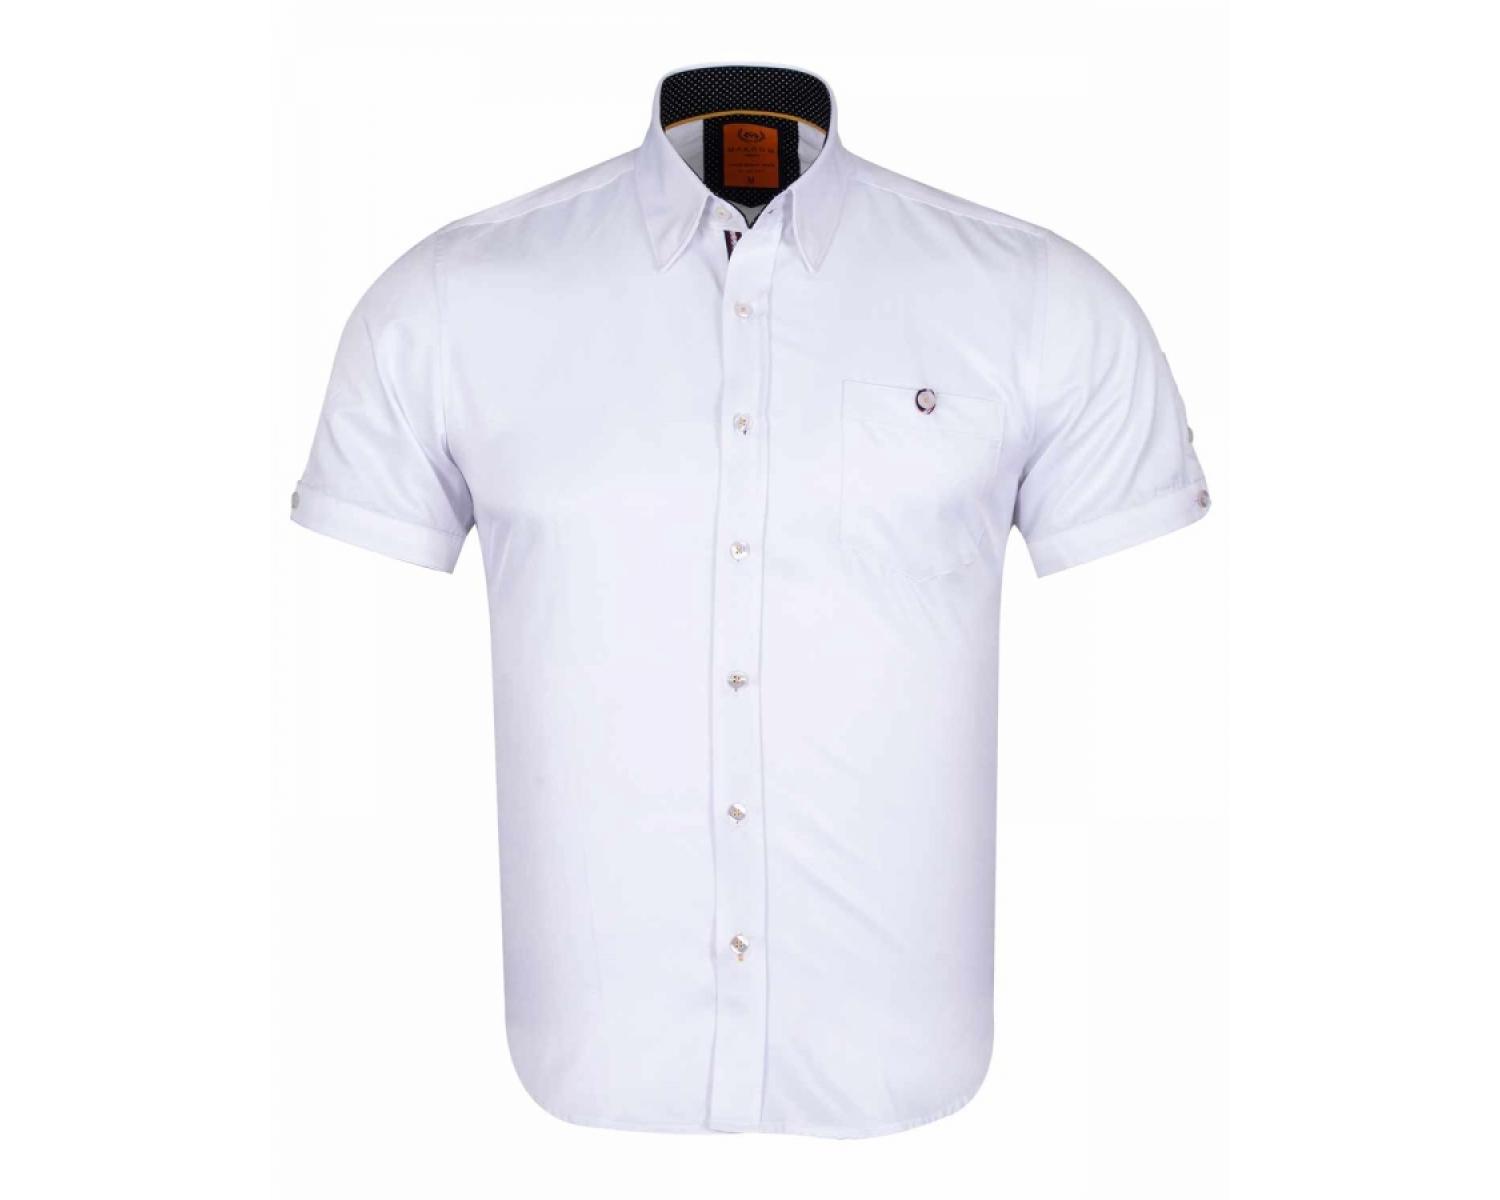 Белая рубашка с коротким рукавом мужская. Белая рубашка в горошек с коротким рукавом мужская. Рубашка белая морская. Short sleeved shirt